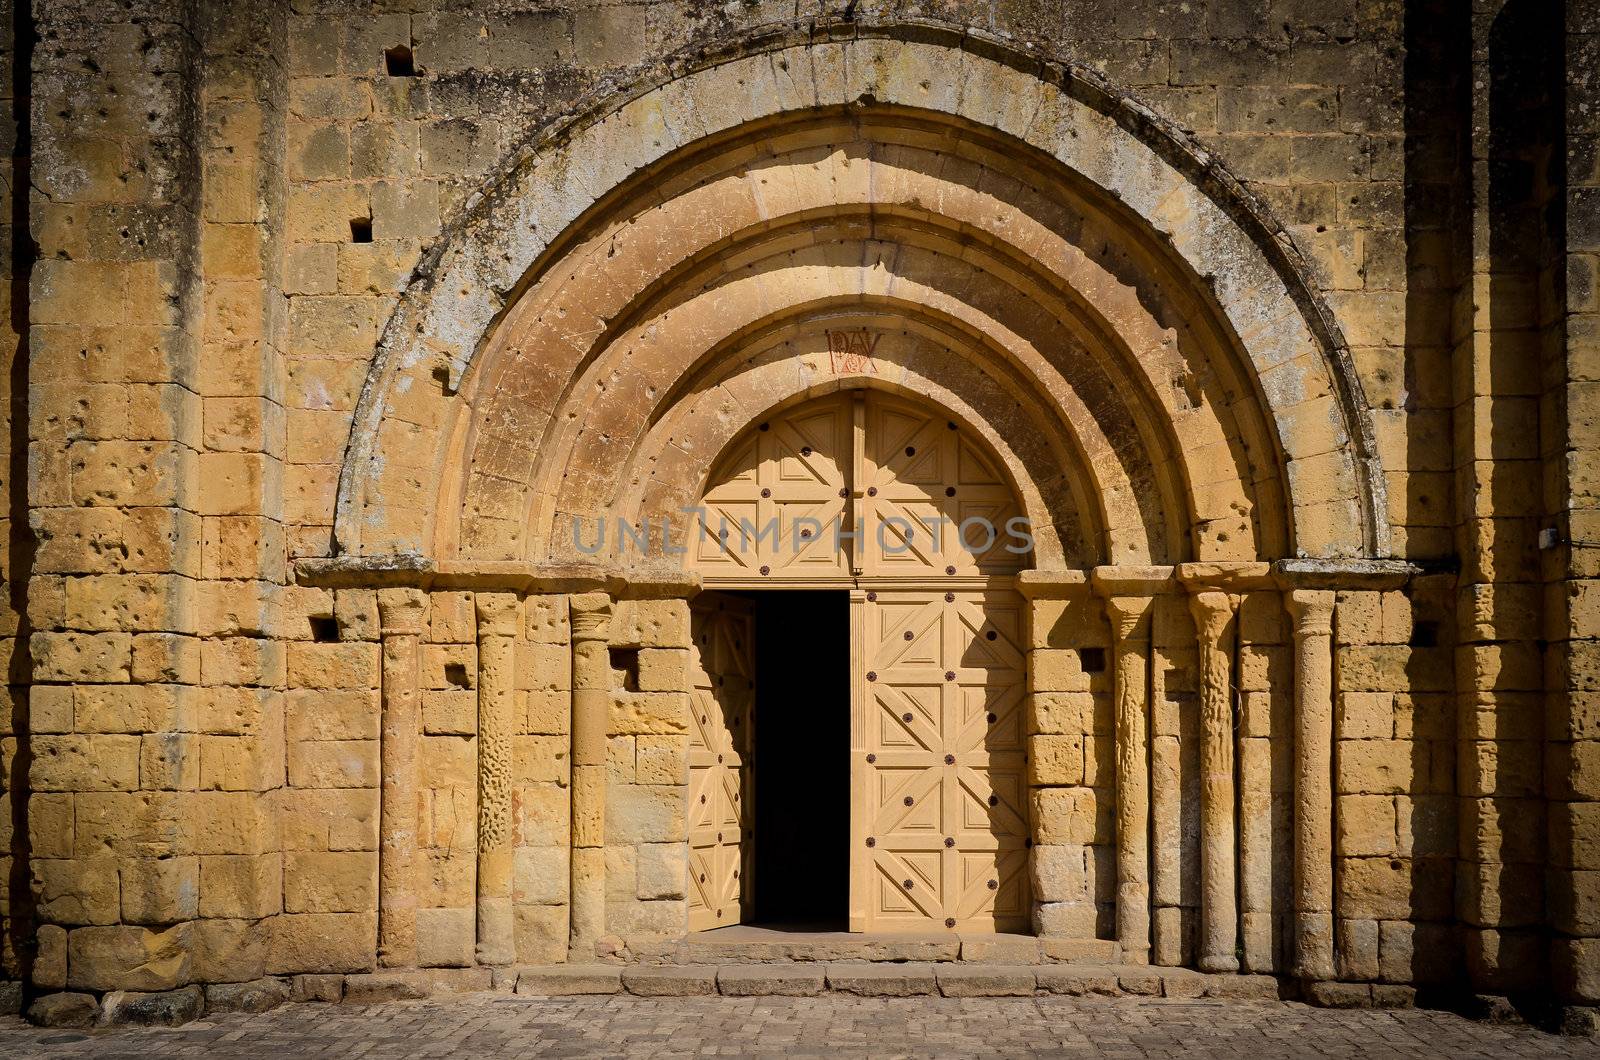 Stone church entrance door and arcs, St Emilion, France